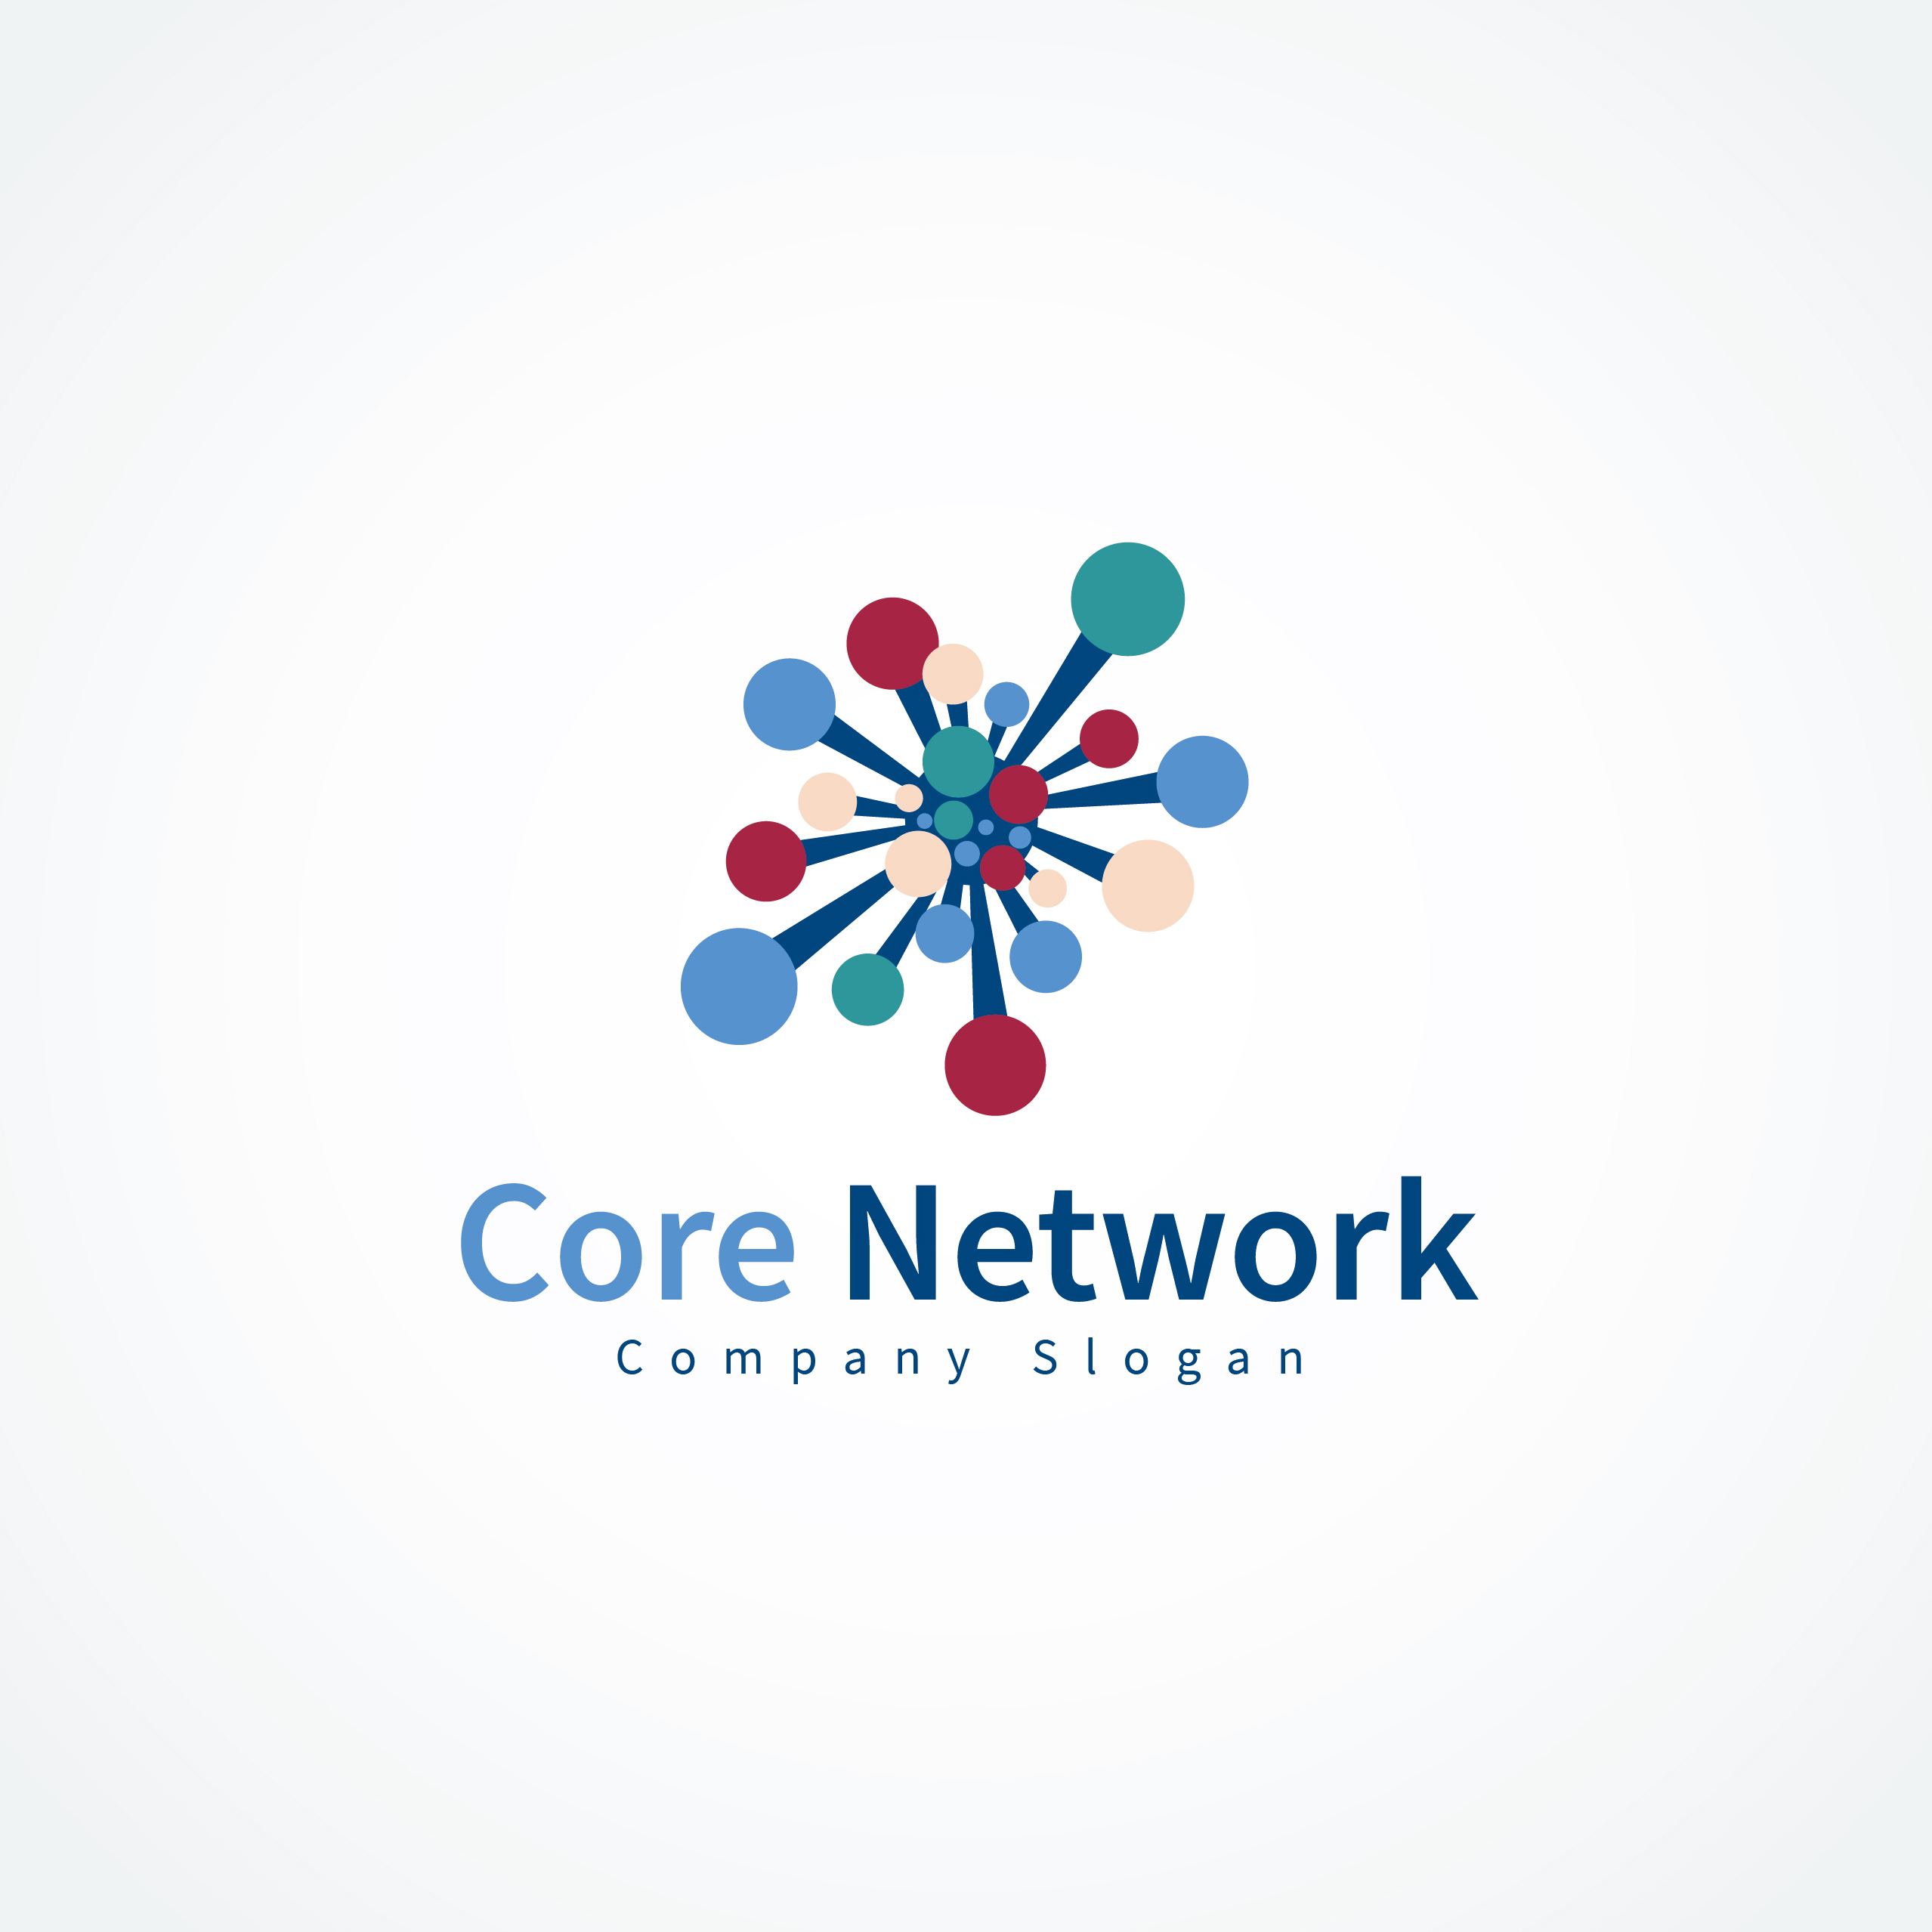 Core Network Logo Template